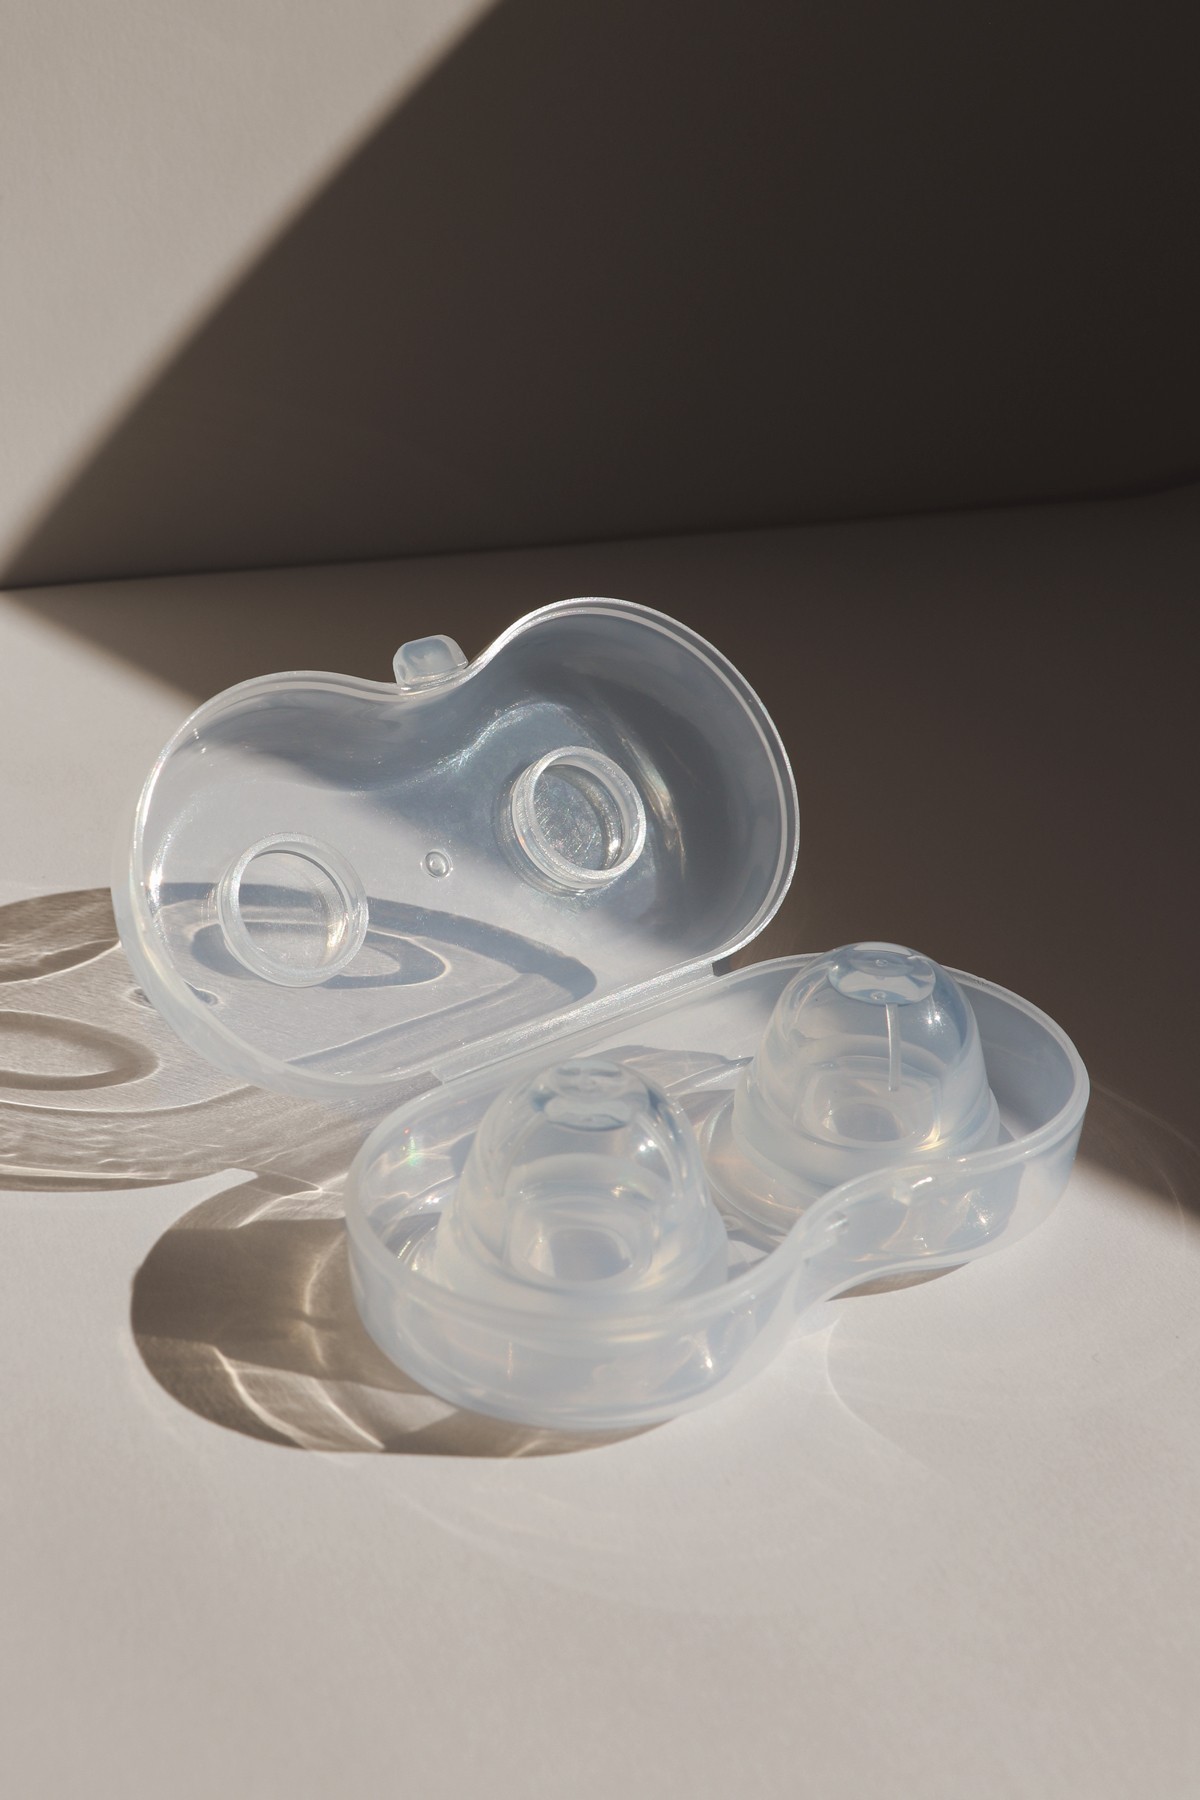 OTVIAP 3PCS Nipple Suction Cups, Flat And Inverted Nipple